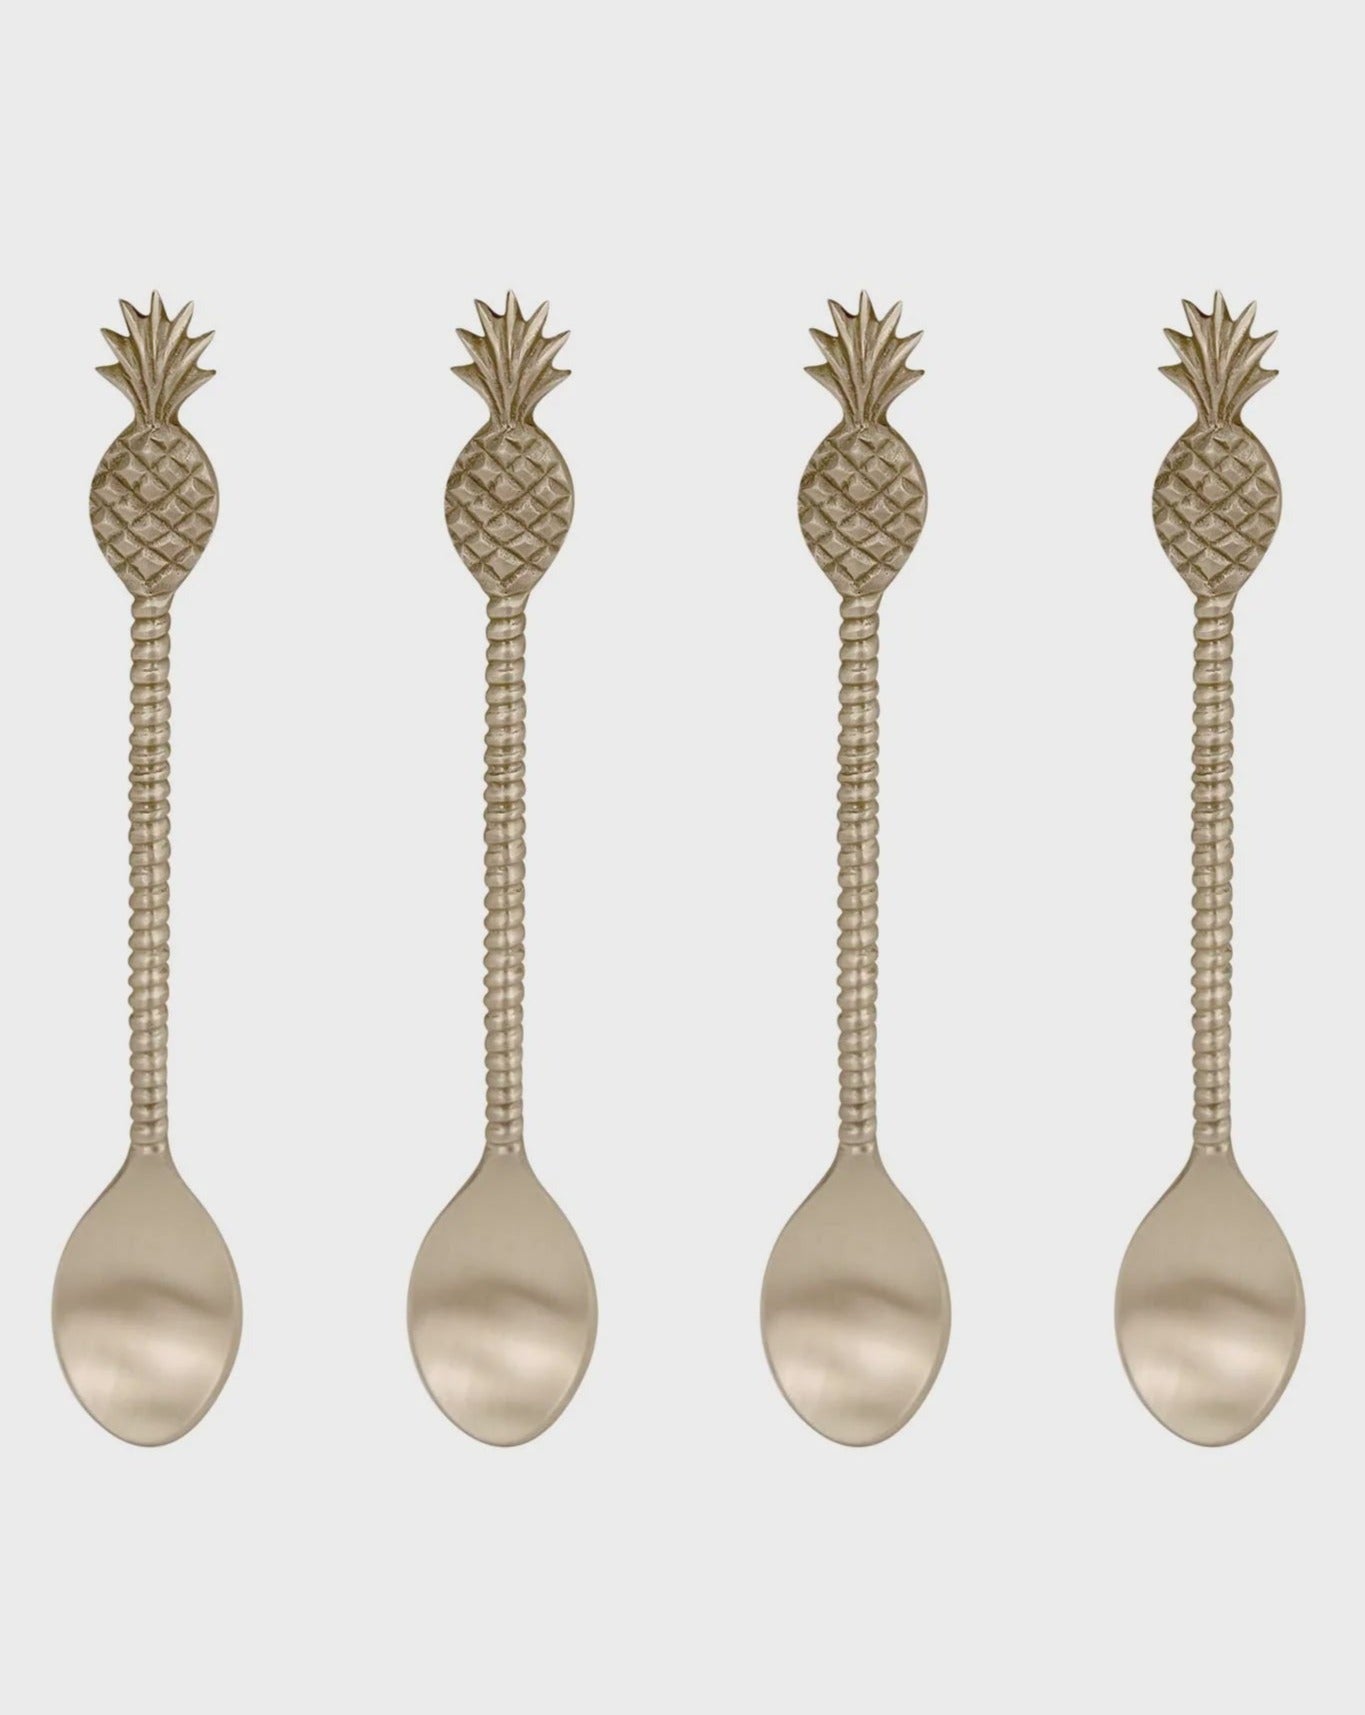 Madras Link Pineapple Brass Spoons - Set of 4